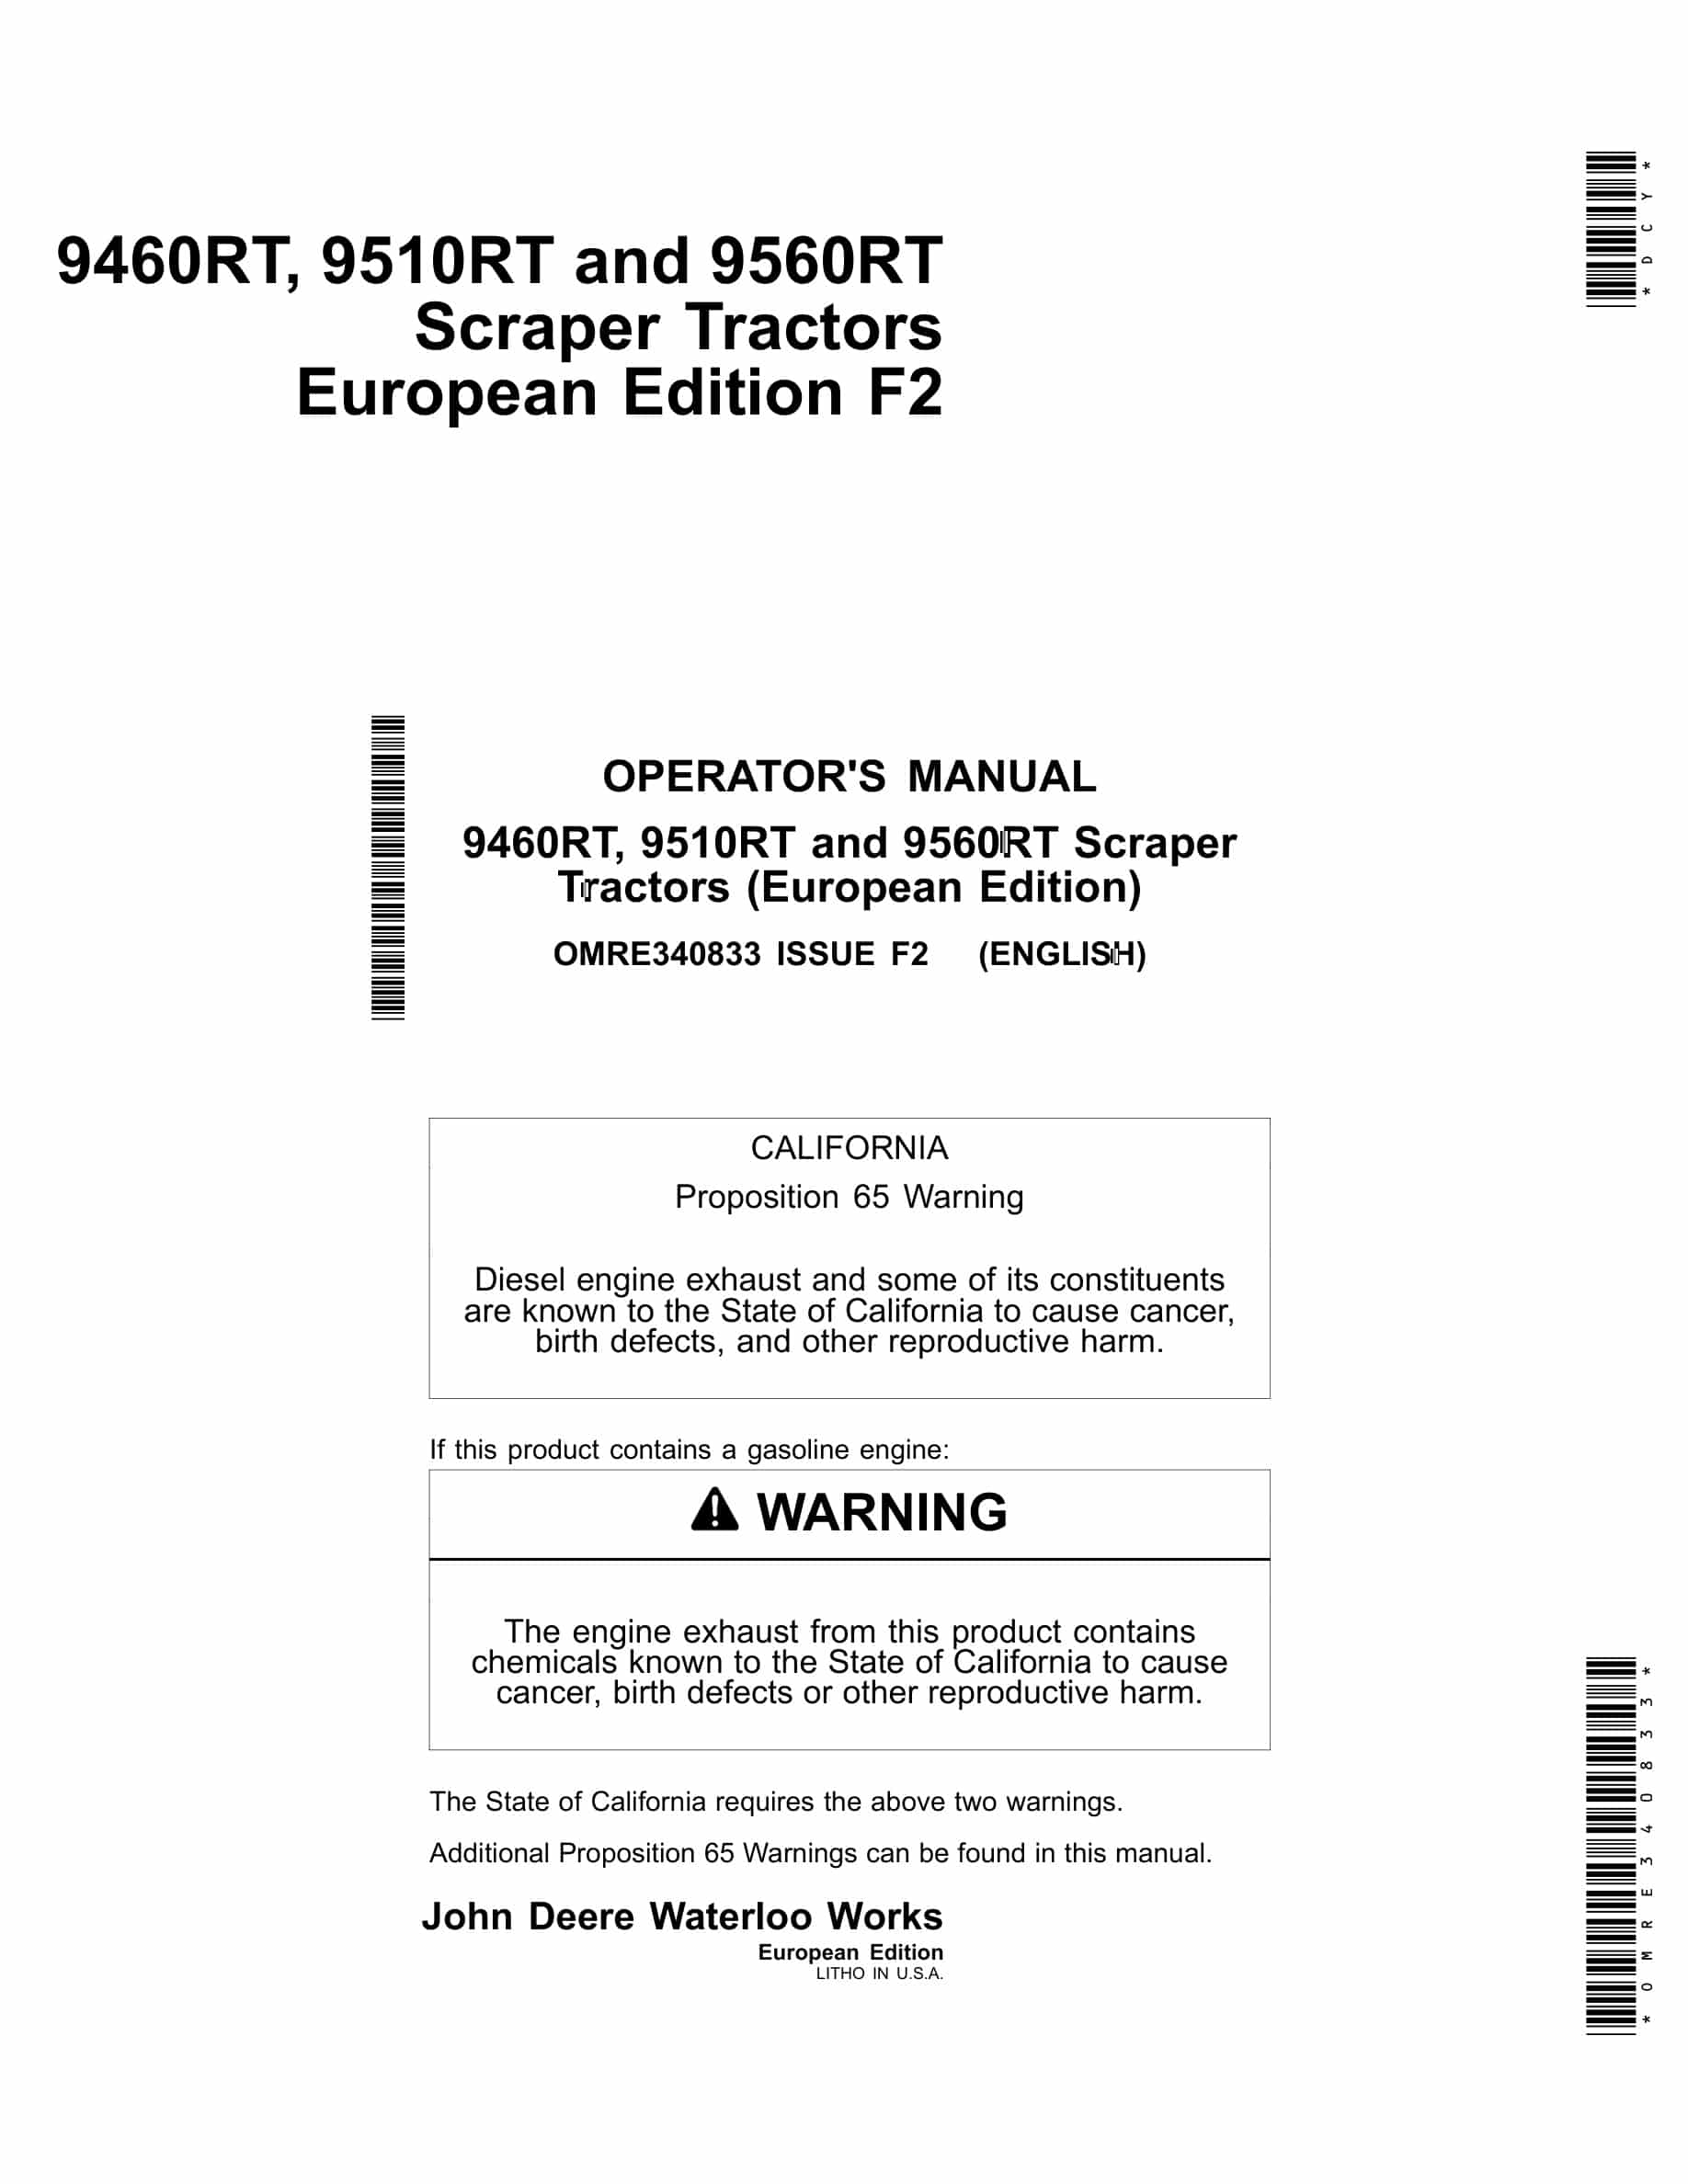 John Deere 9460rt, 9510rt And 9560rt Scraper Tractors Operator Manuals OMRE340833-1